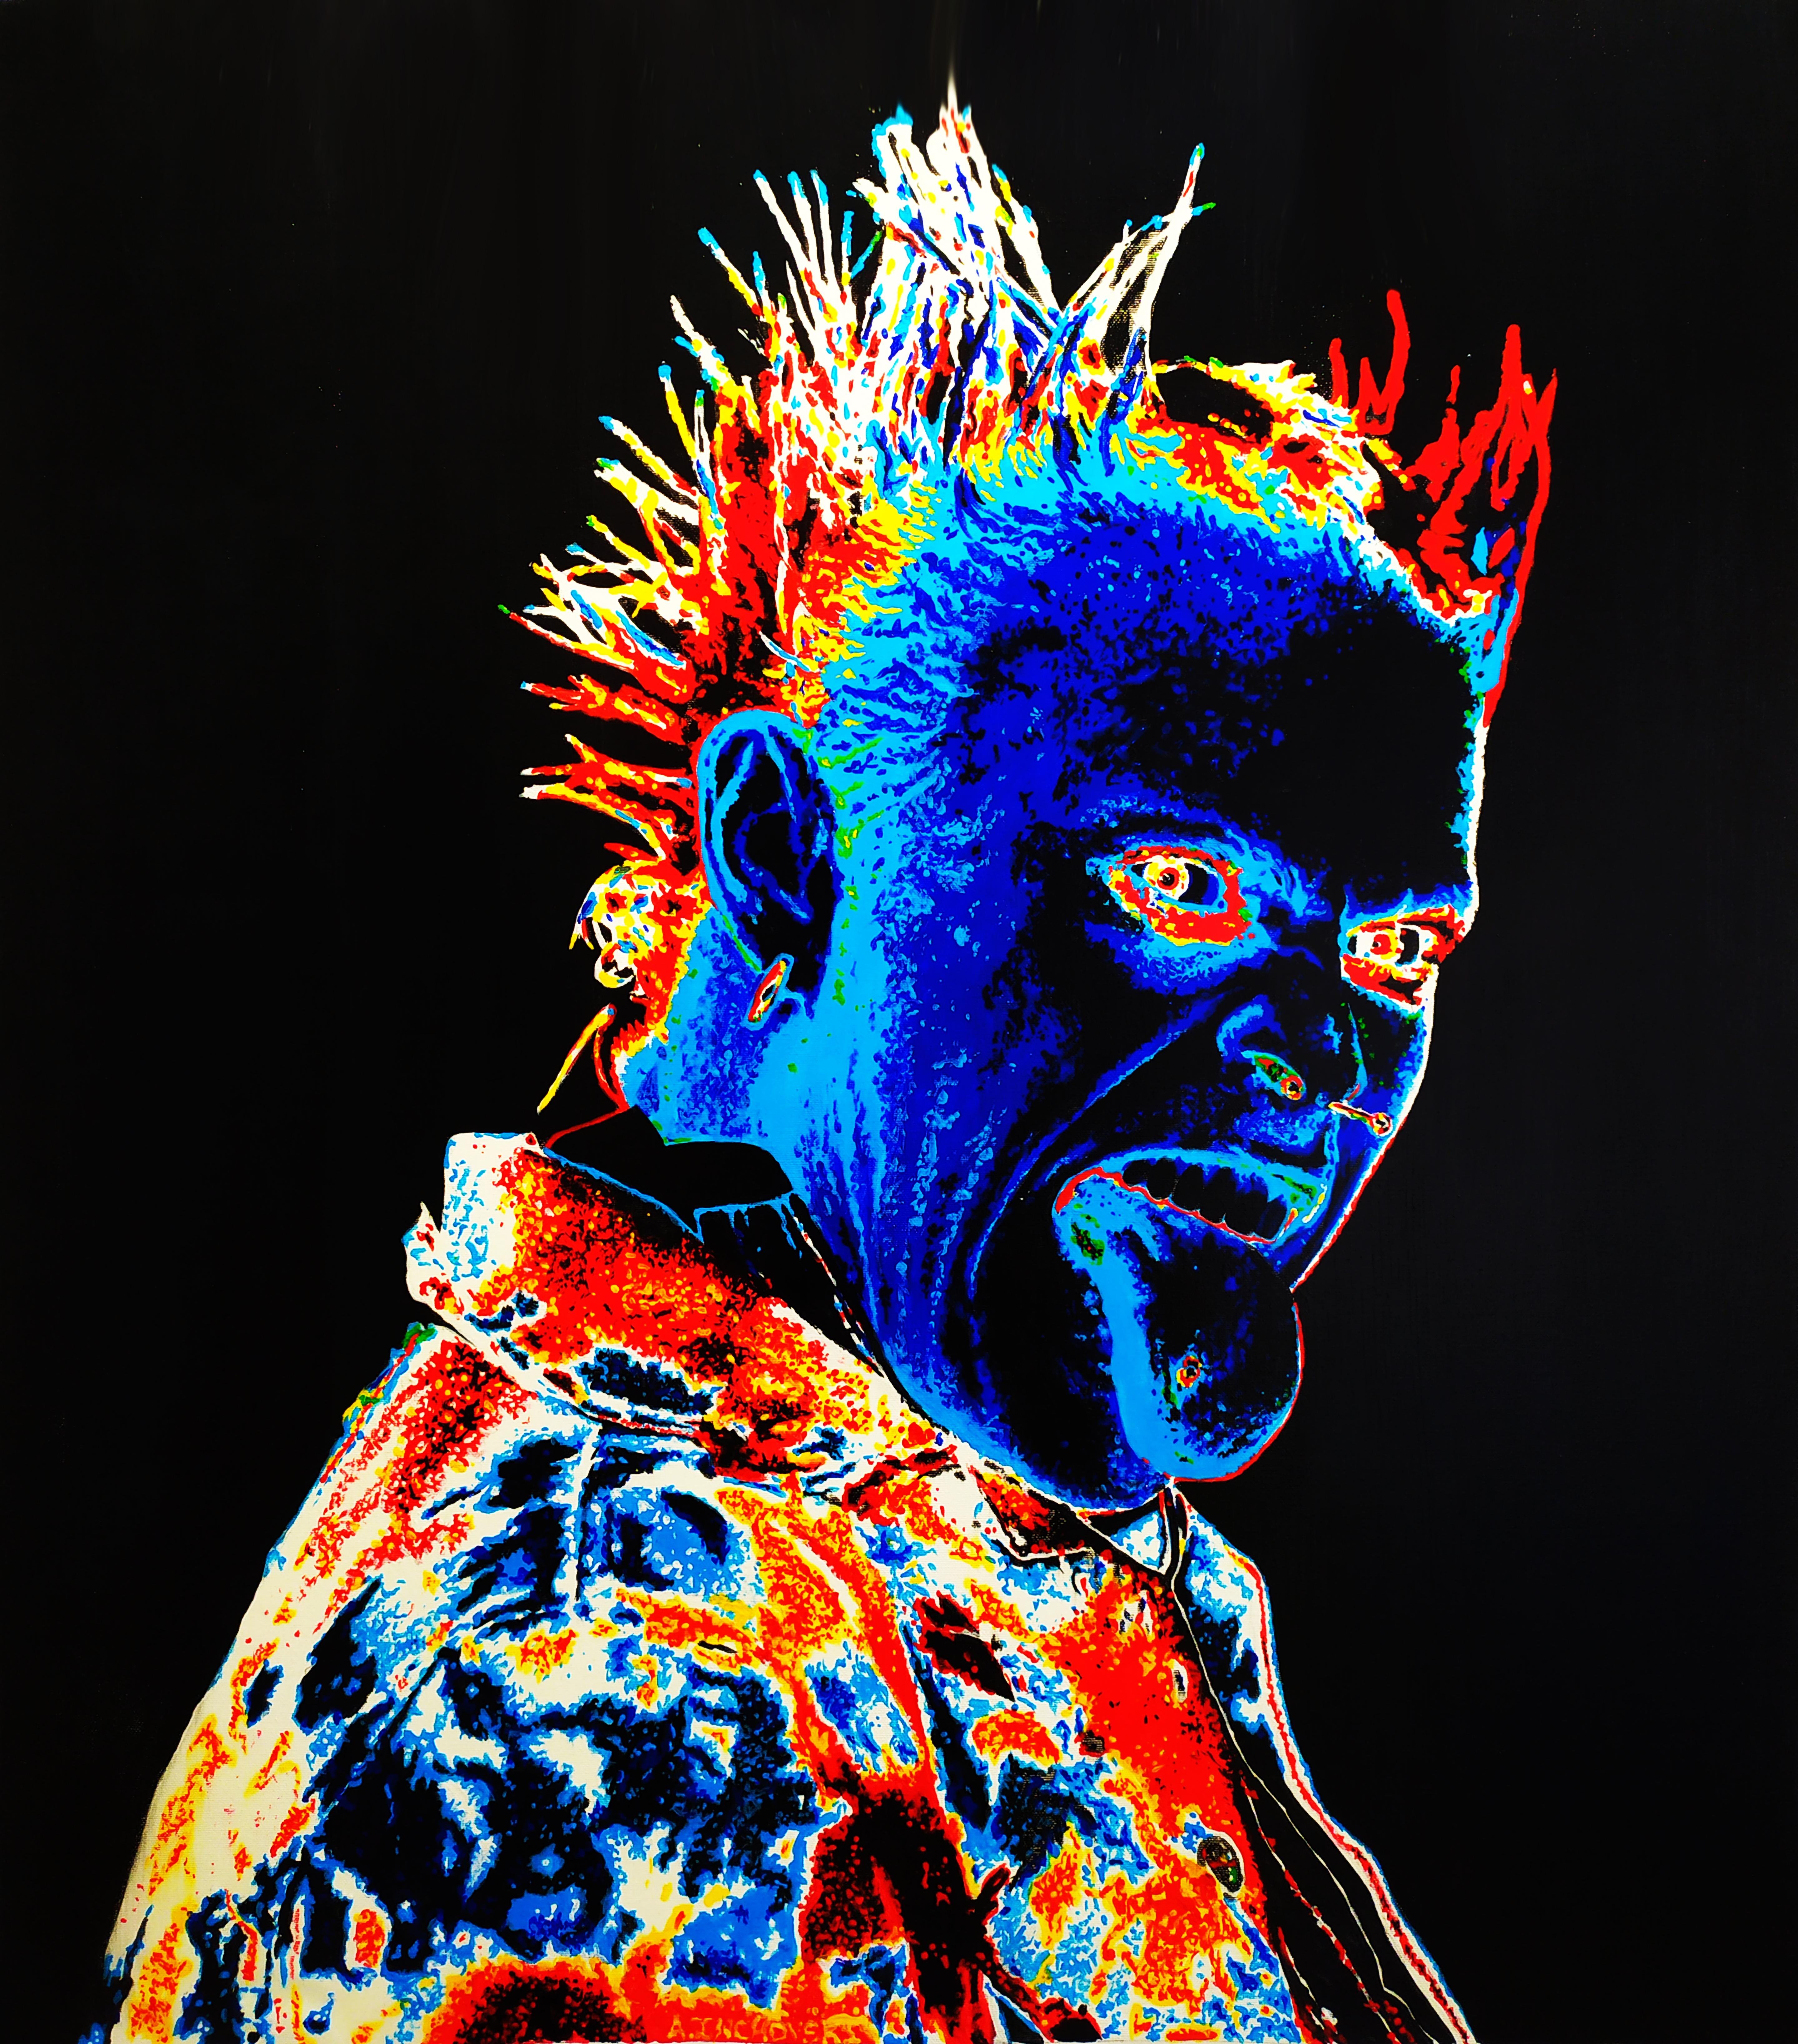 Alexandar Inchovski Figurative Painting - Keith Flint - Portrait Painting Colors Black Blue Red White Yellow Orange 